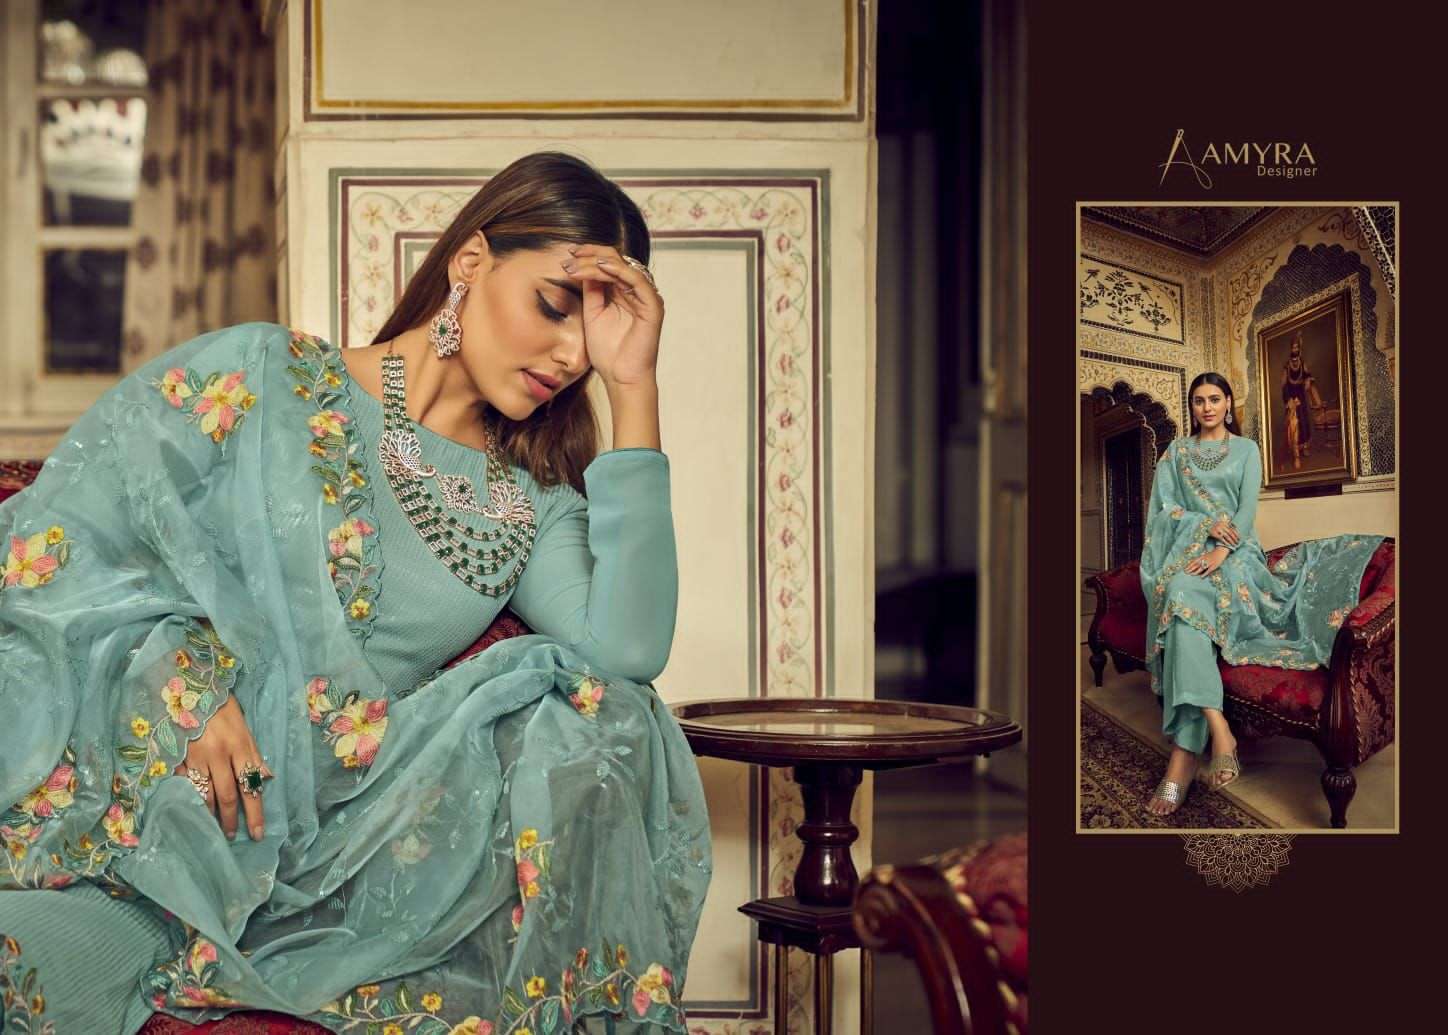 aamyra designer mariyab 201-204 series stylish designer salwar suits wholesaler surat 